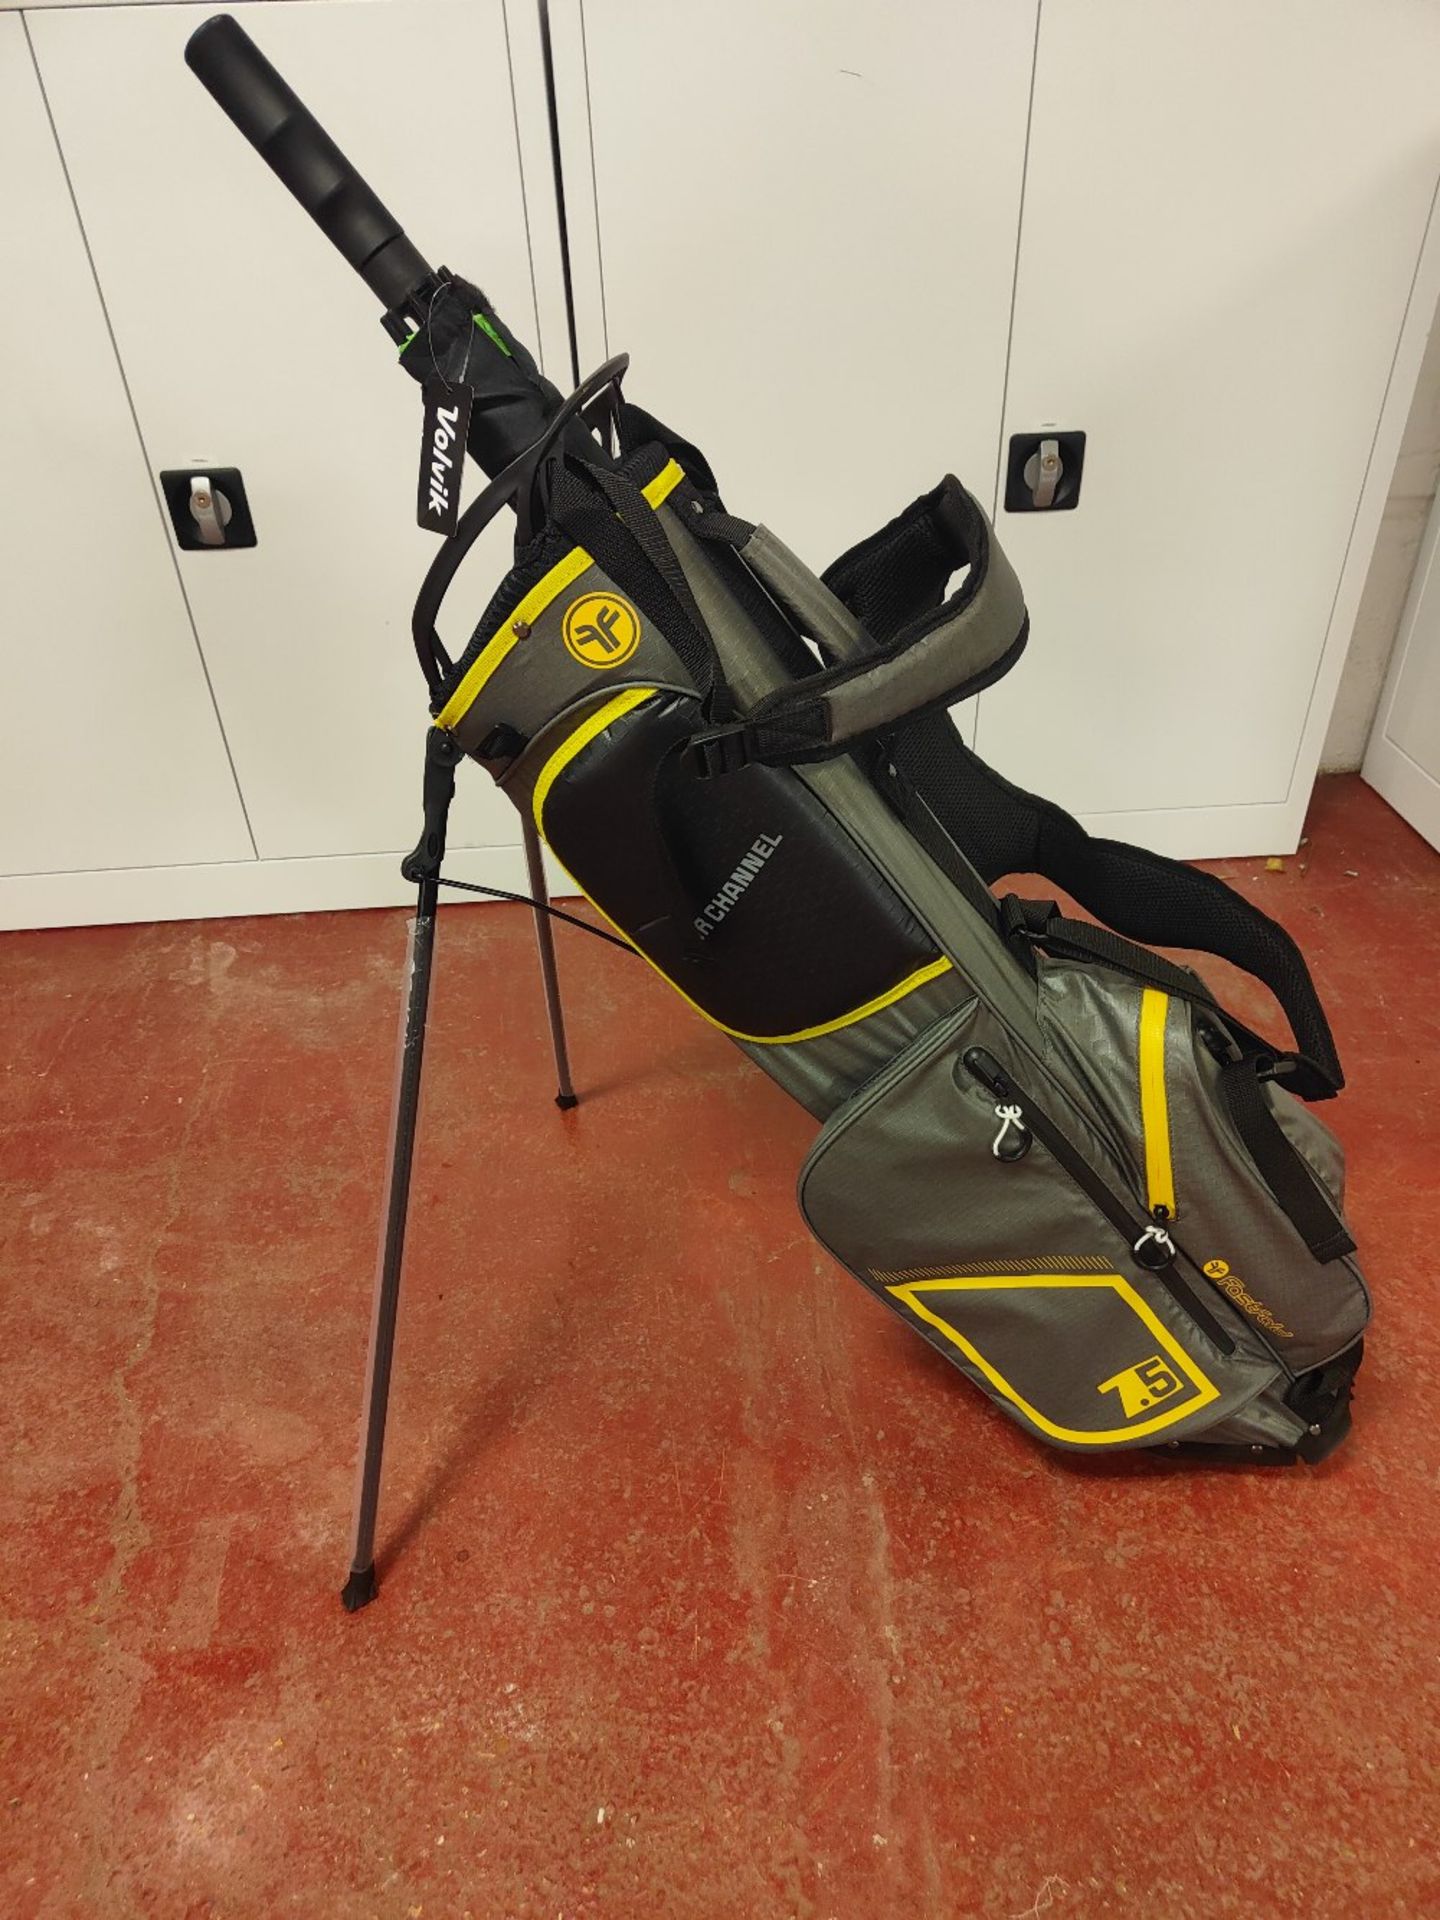 Fastfold Orbitor Rain Dry carry golf bag with Volvik umbrella - Image 3 of 4